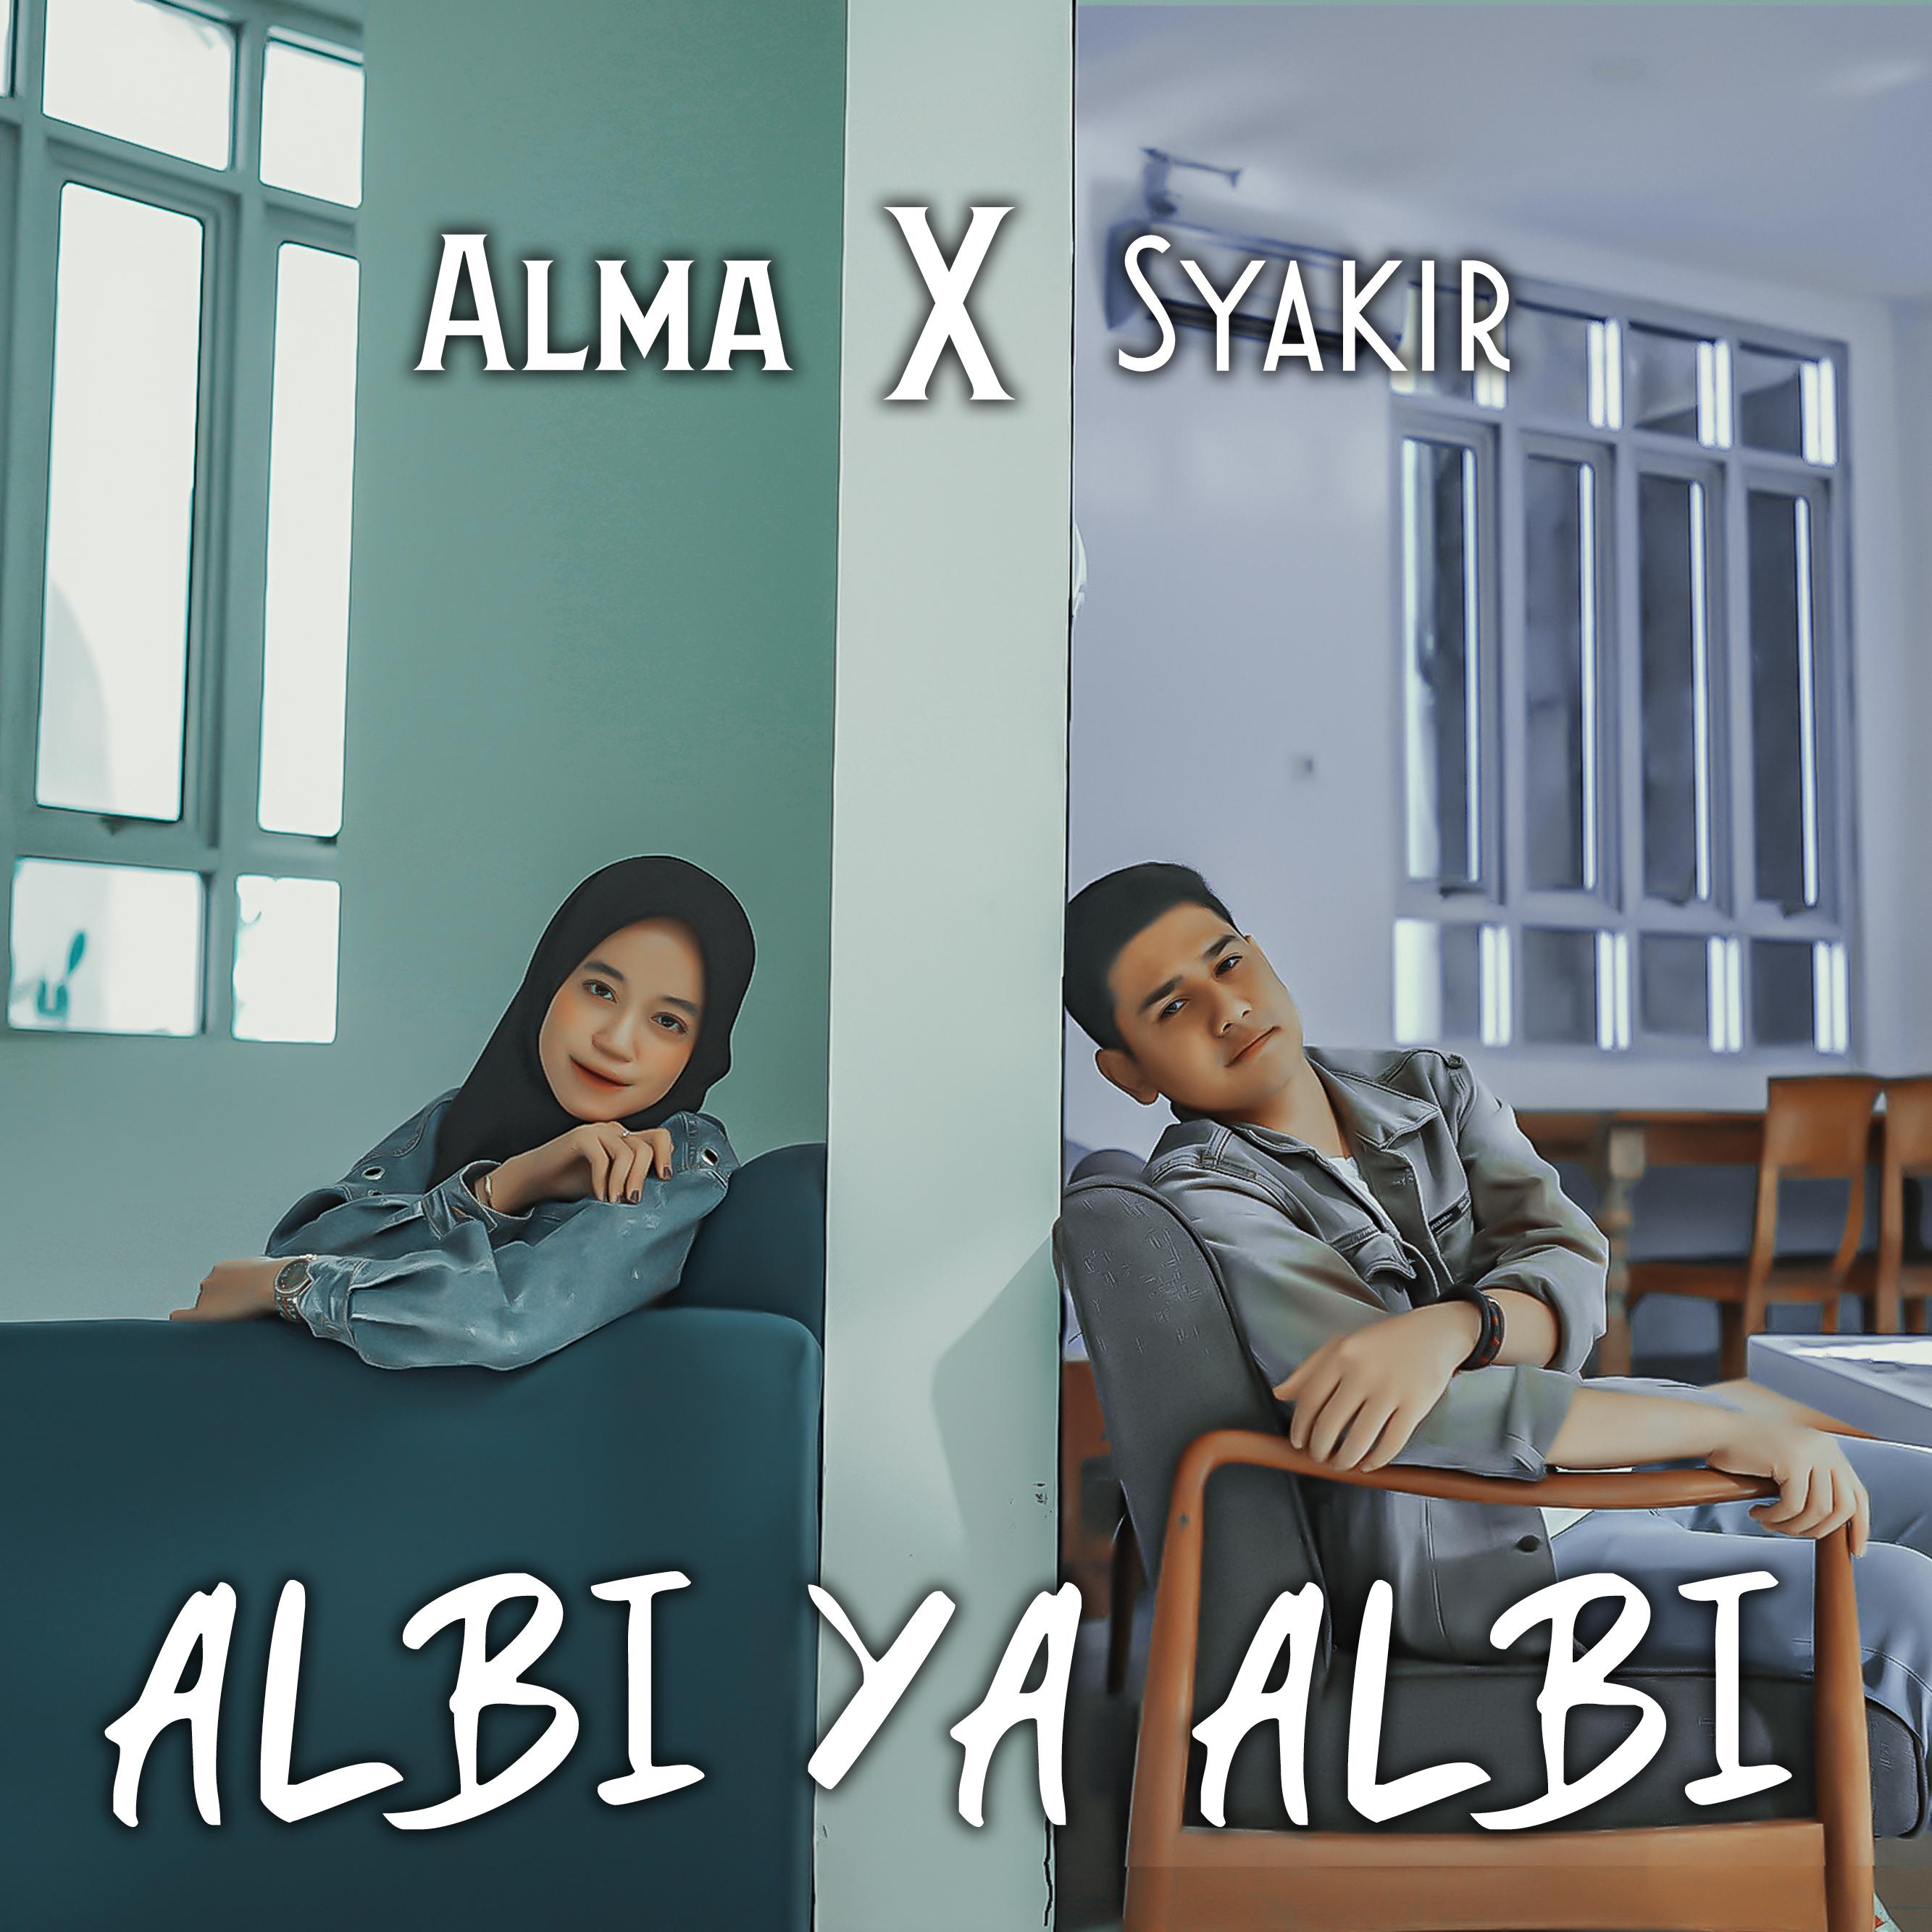 Постер альбома Albi Ya Albi